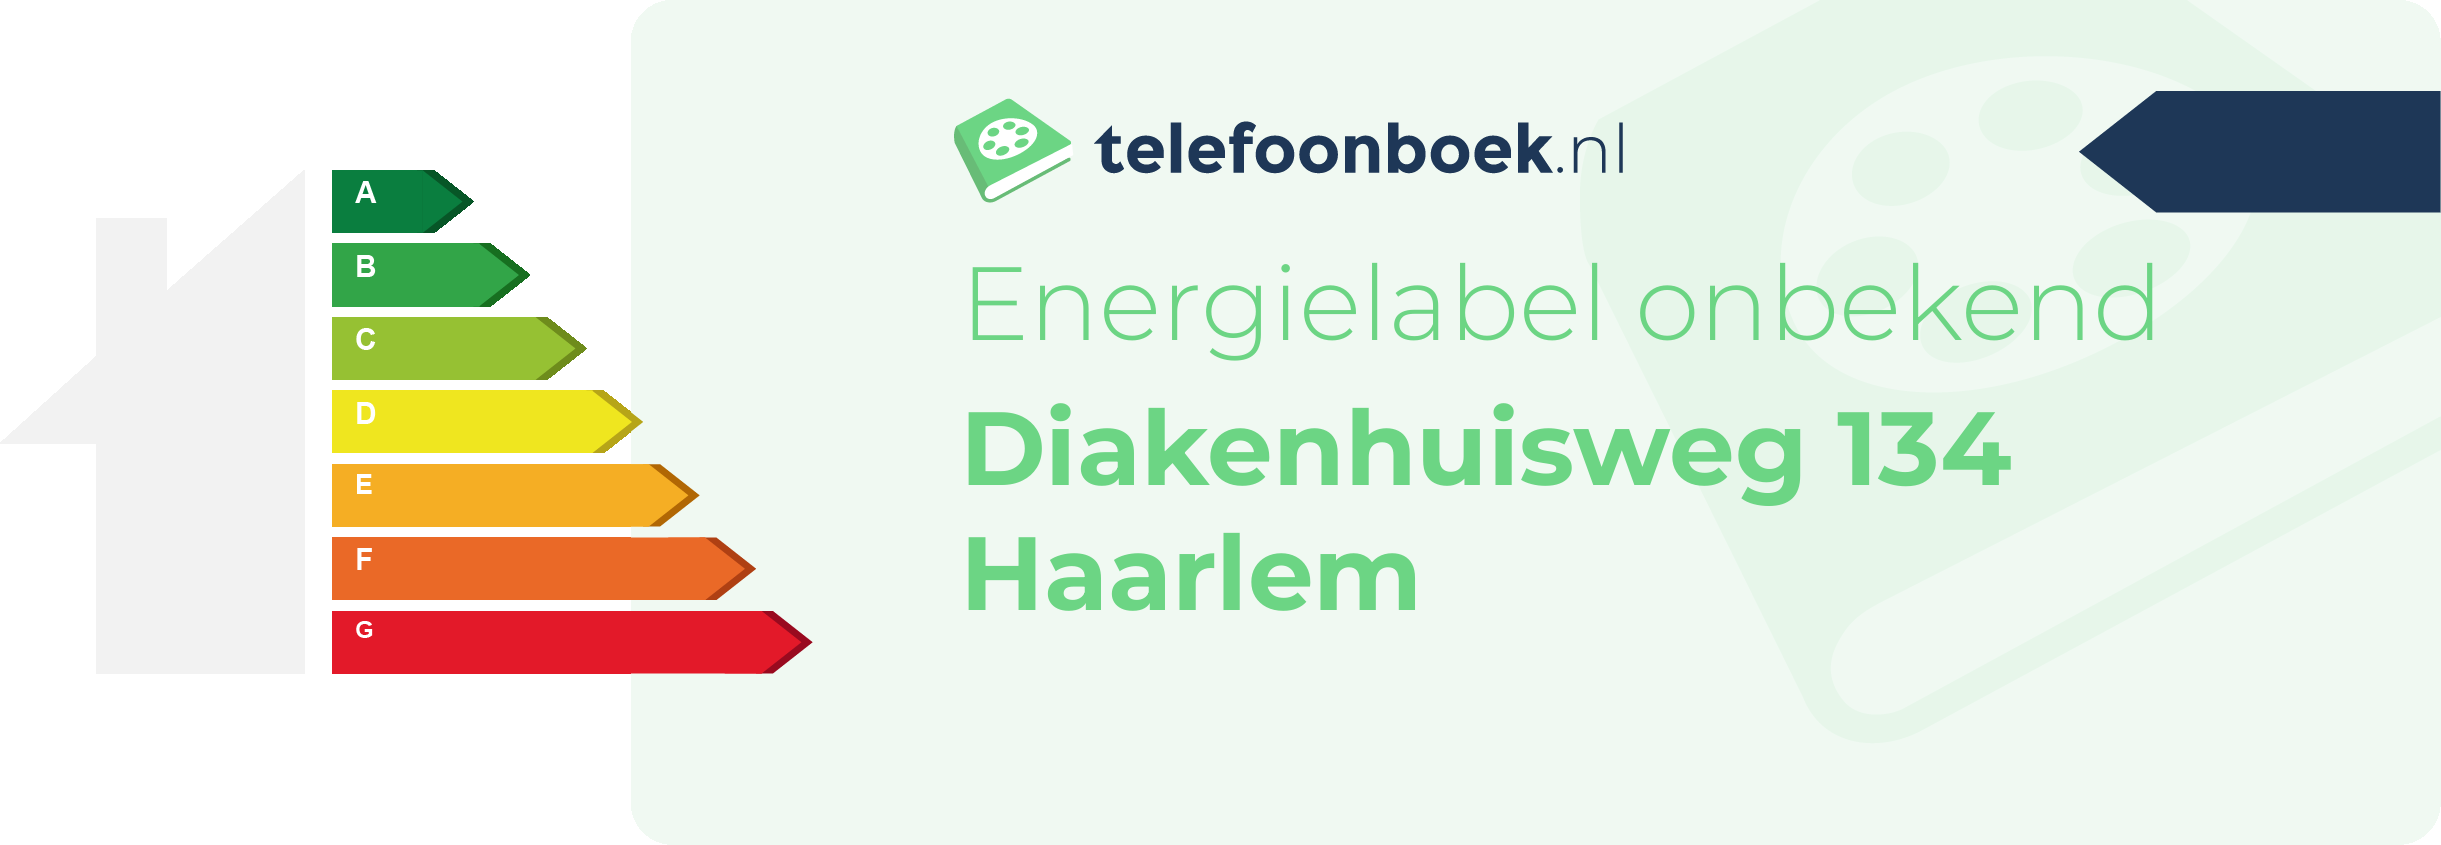 Energielabel Diakenhuisweg 134 Haarlem